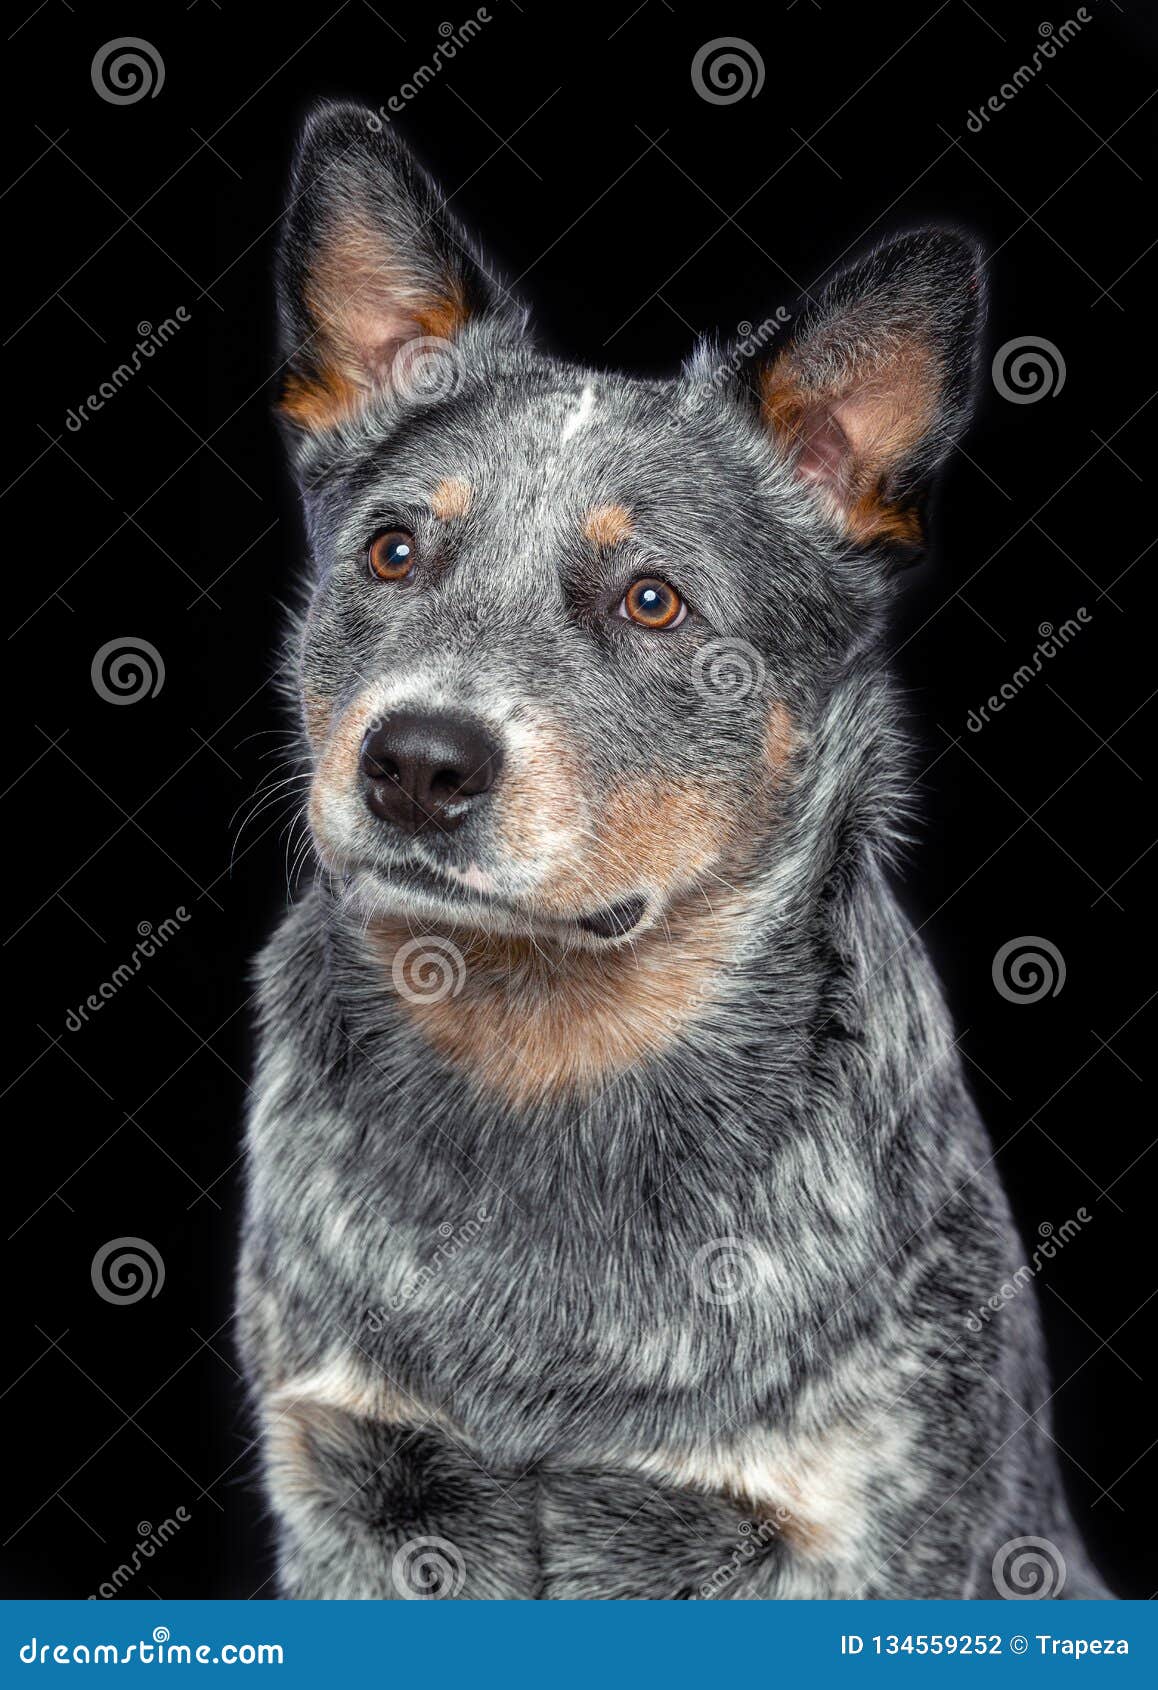 Australian Cattle Dog, Blue Dog Isolated on Black Background Stock Photo Image of looking, purebred: 134559252